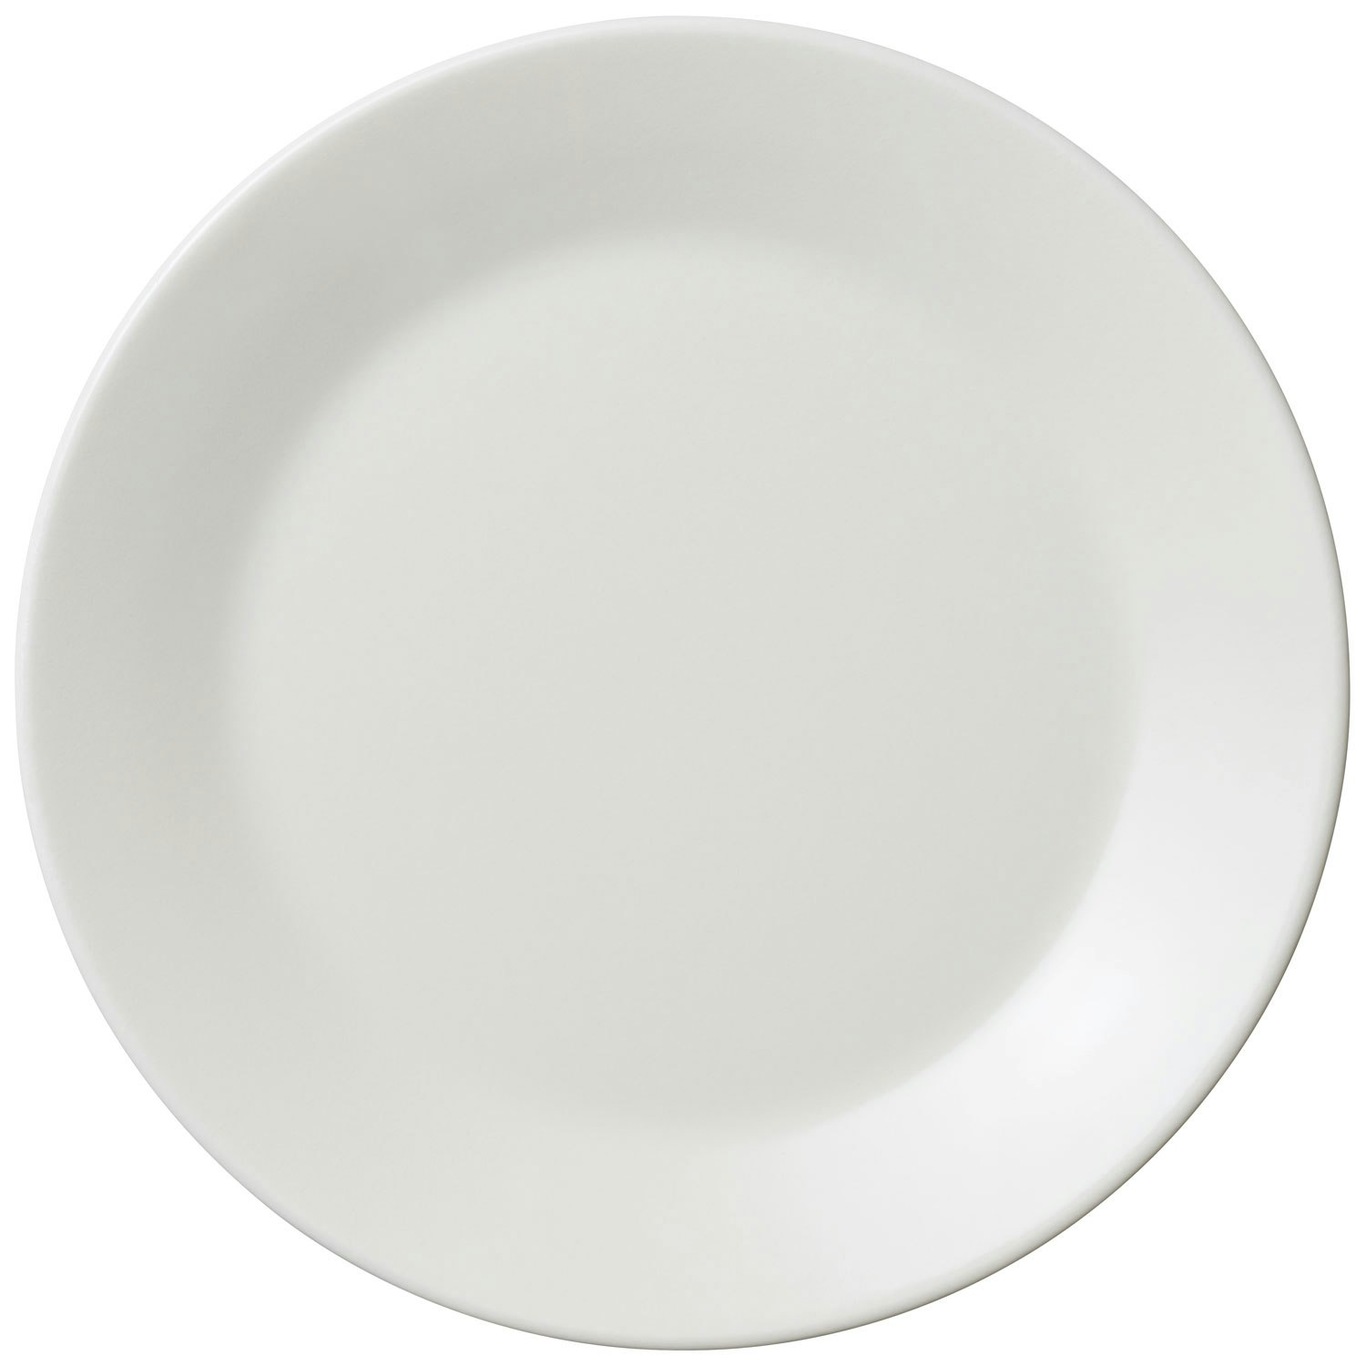 Mainio Side Plate White, 15 cm